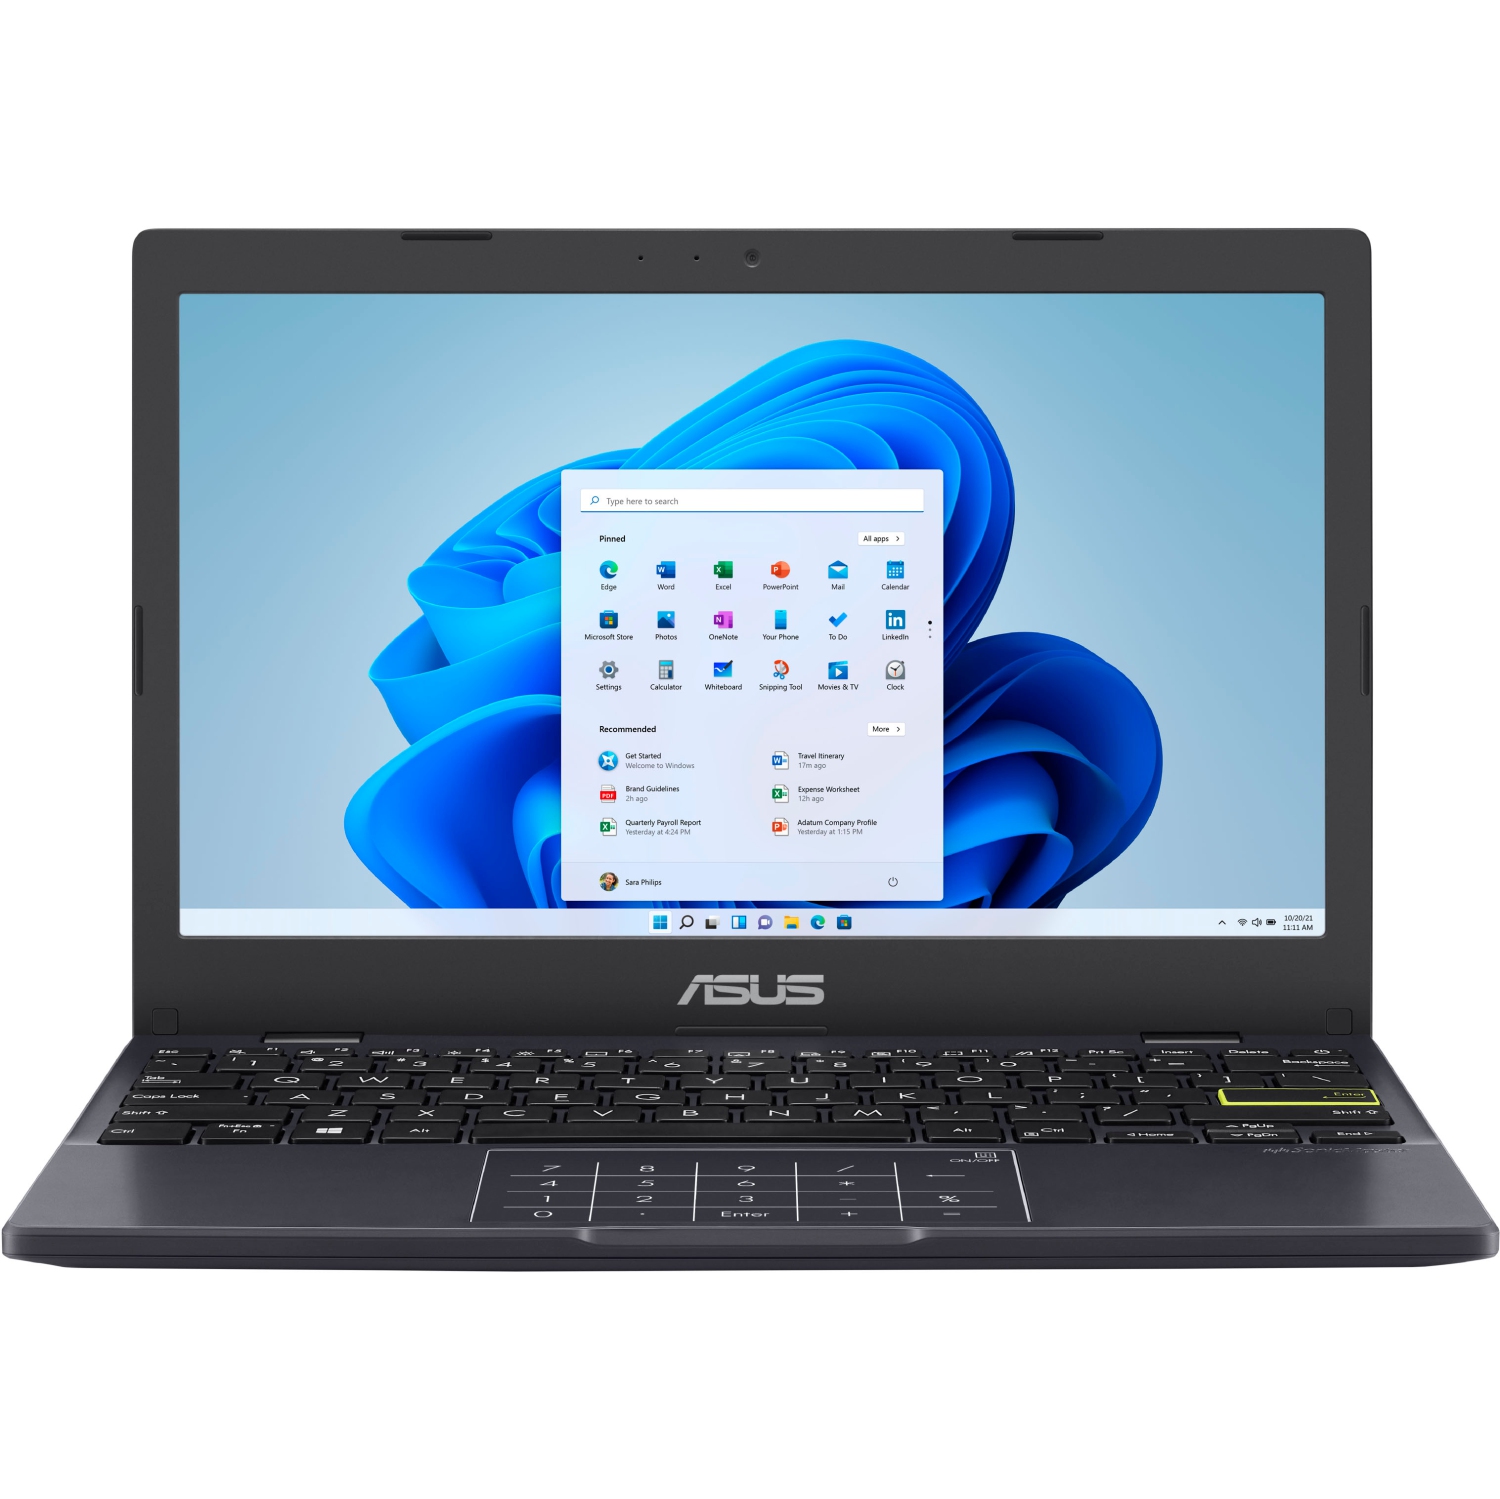 ASUS 11.6" HD Laptop (Intel Celeron N4020, 4GB RAM, 64GB eMMC, Windows 11) - Star Black (E210MA-TB.CL464BK) - Open Box